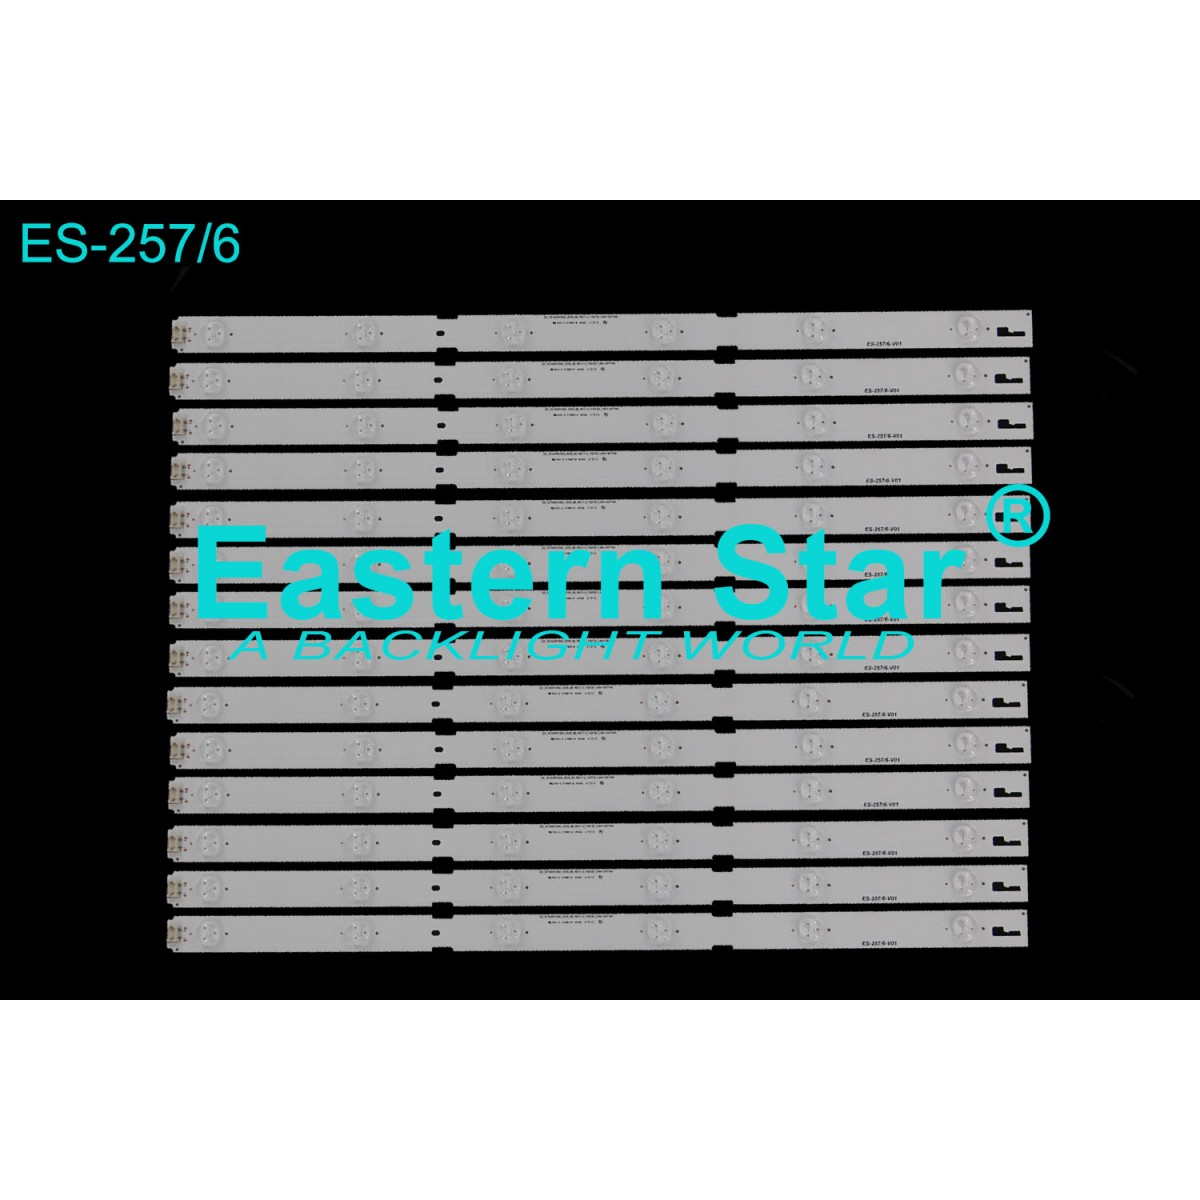 ES-257, SAMSUNG_2015ARC550, ZPM60600-AC, ZMB60600-AC, ZLH60600-AC, TV LED BAR